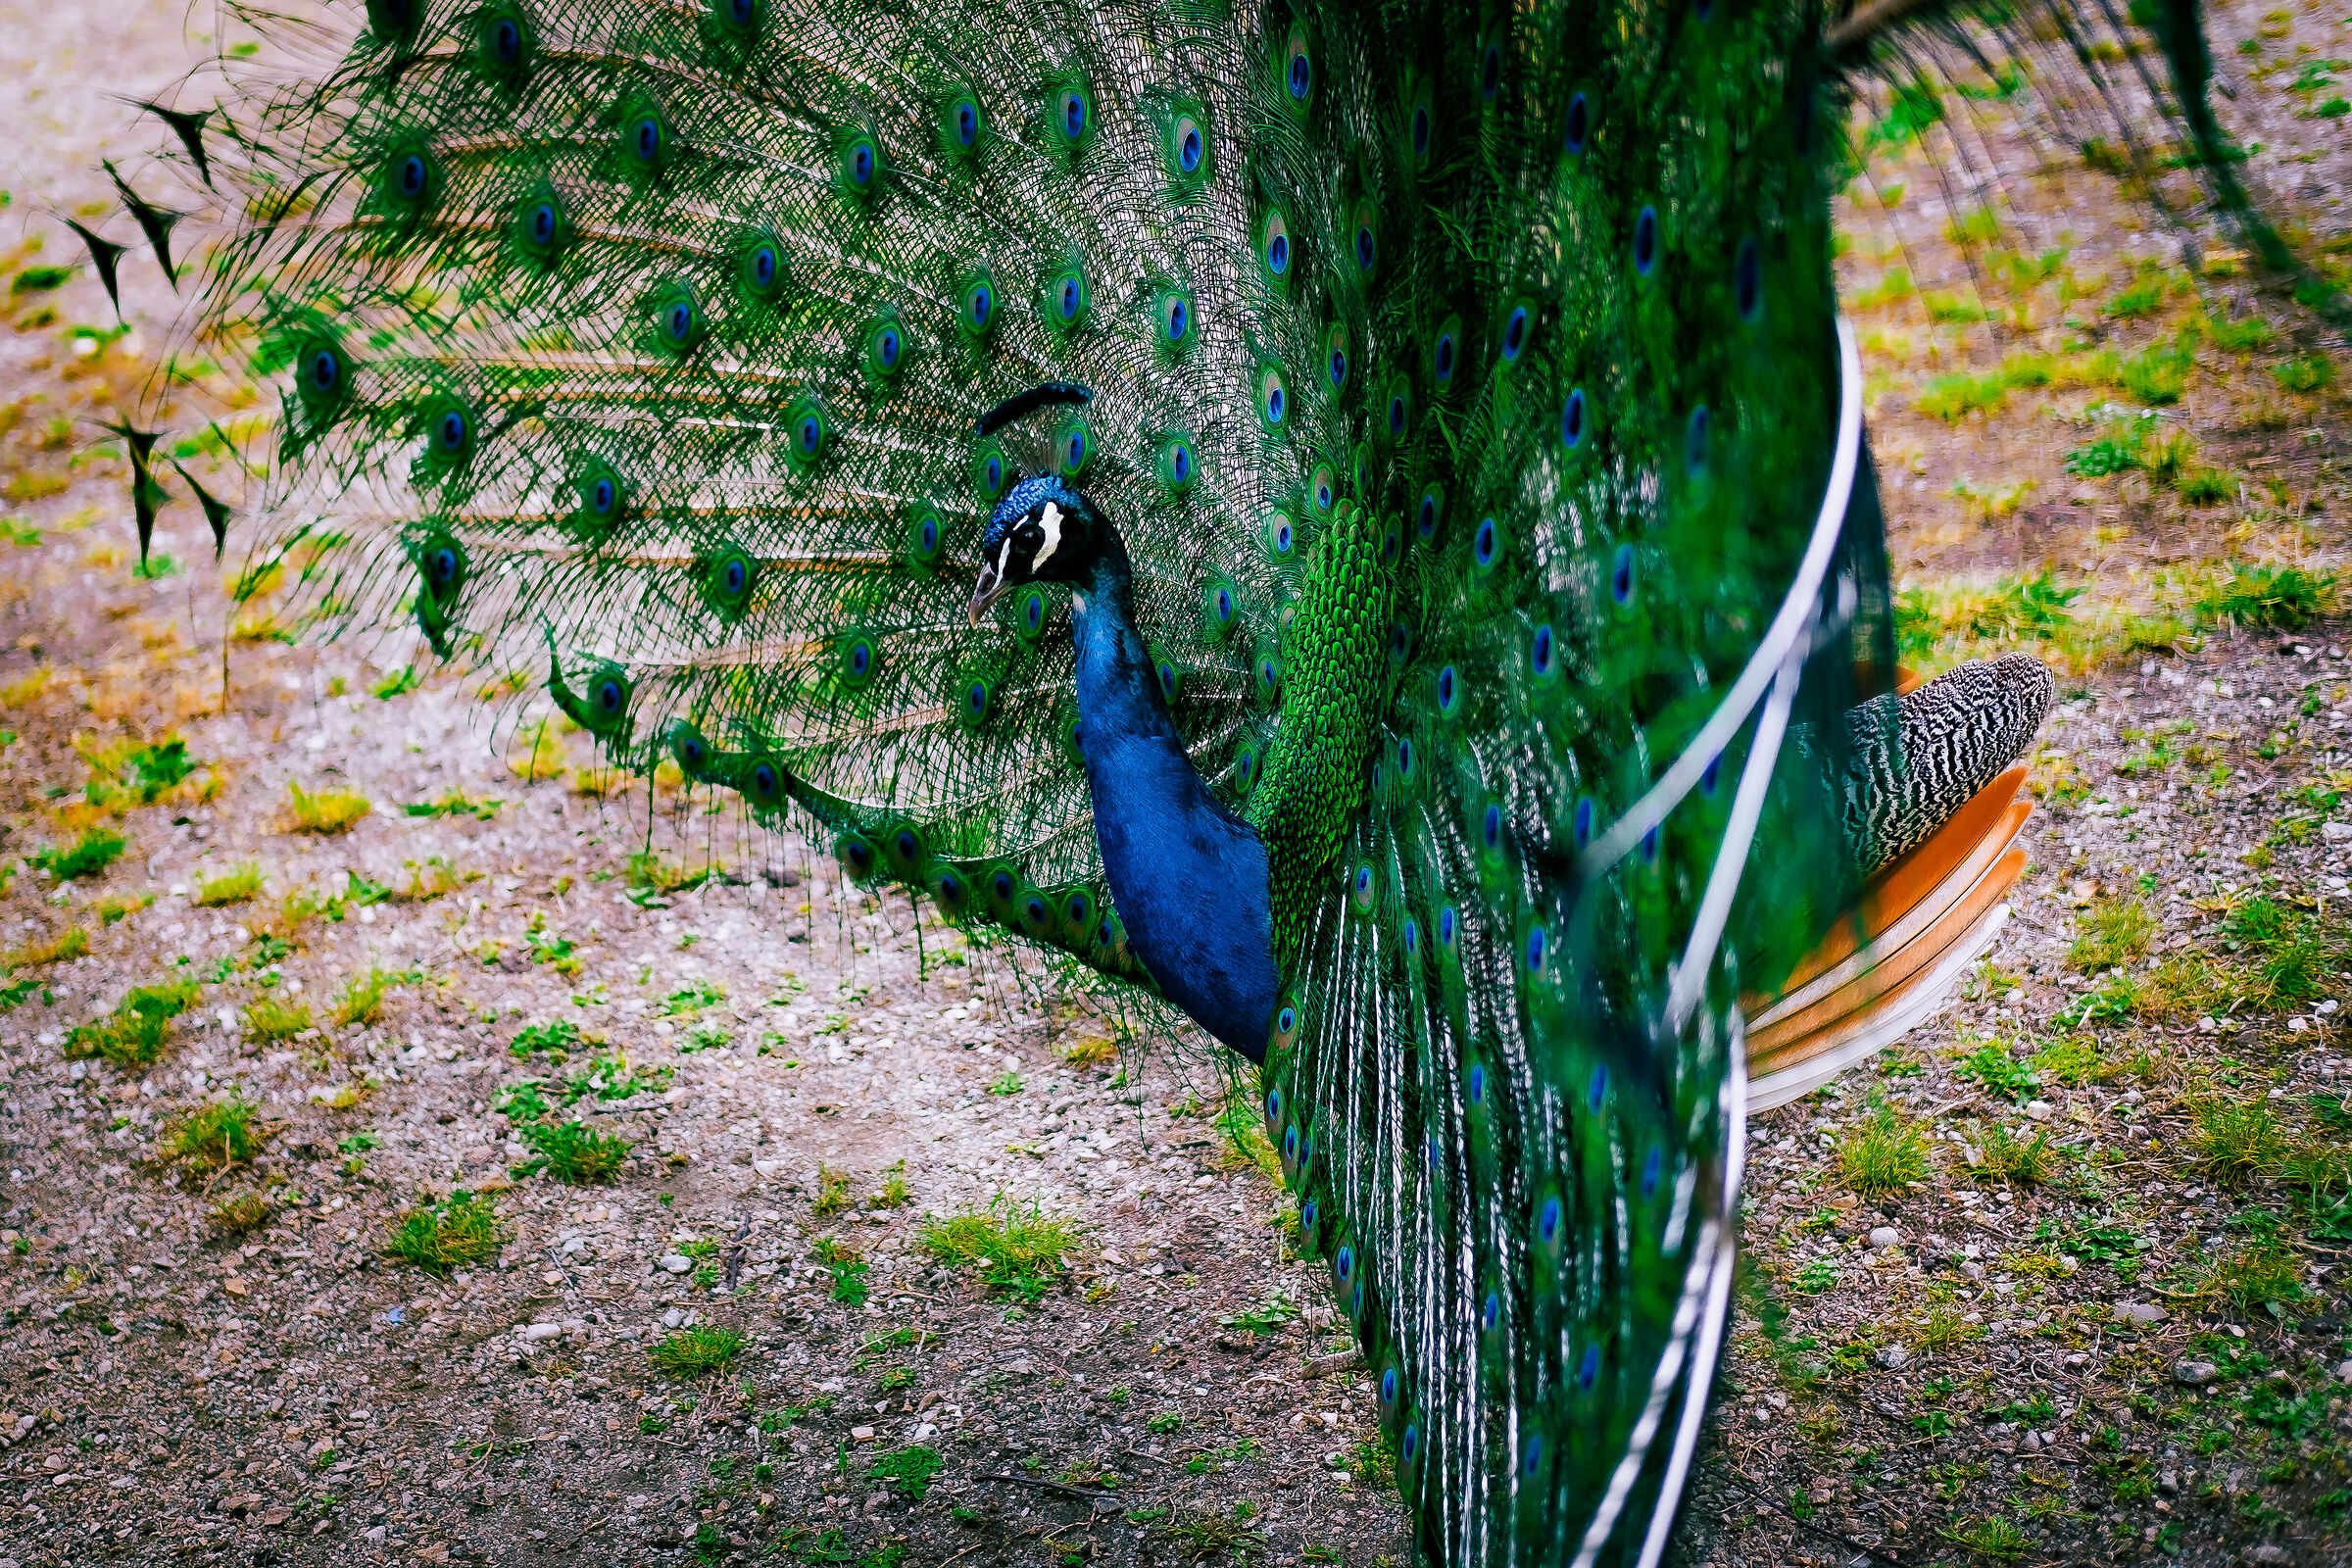 So' fig, so' beautiful, so' peacock...